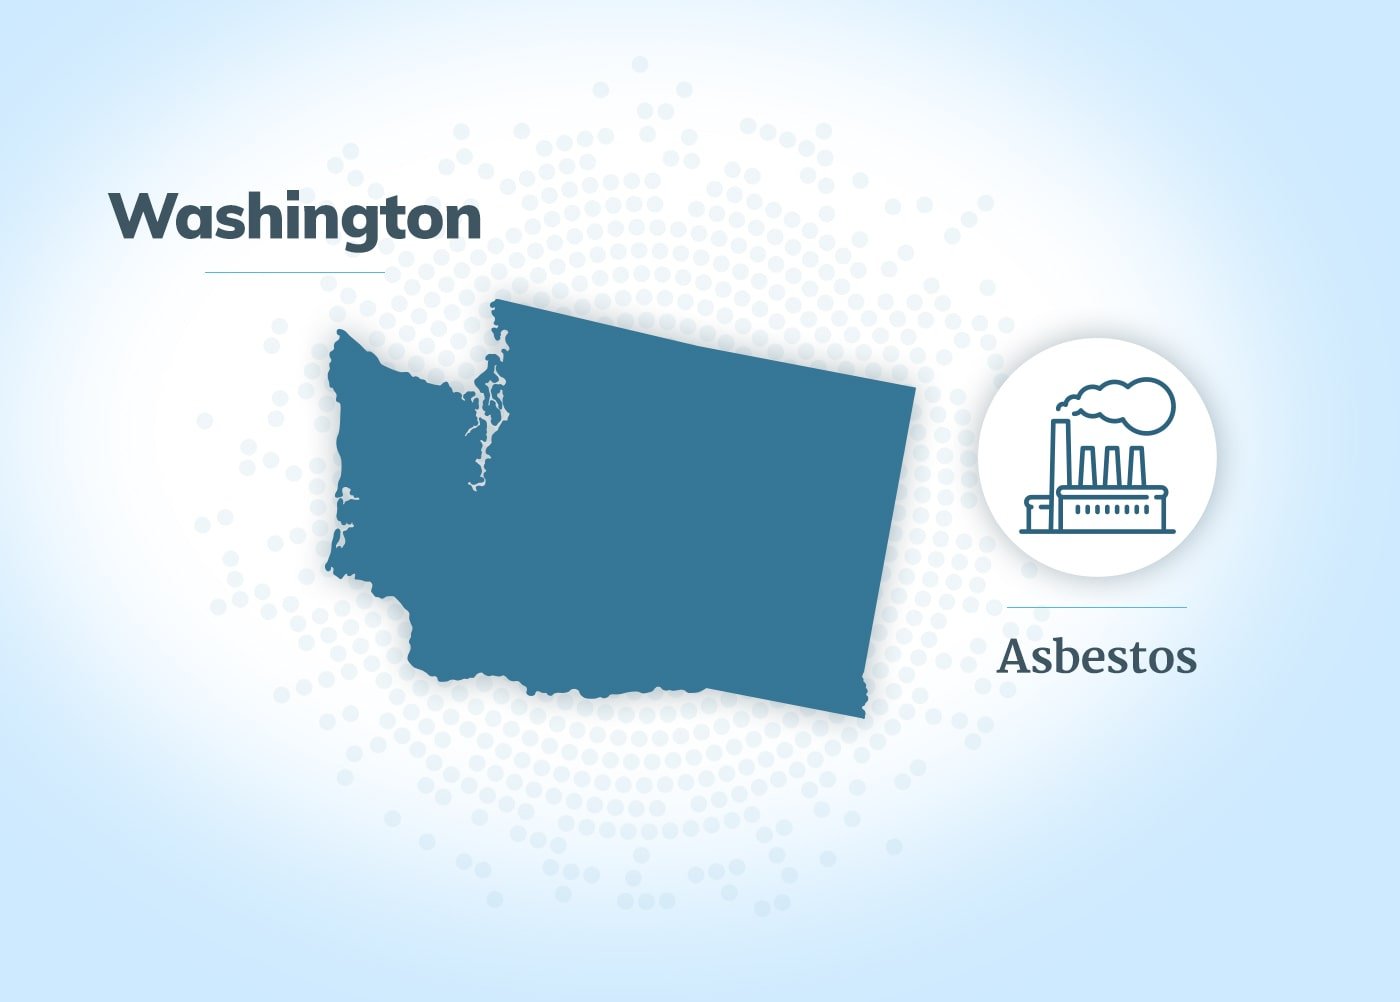 Asbestos exposure in Washington